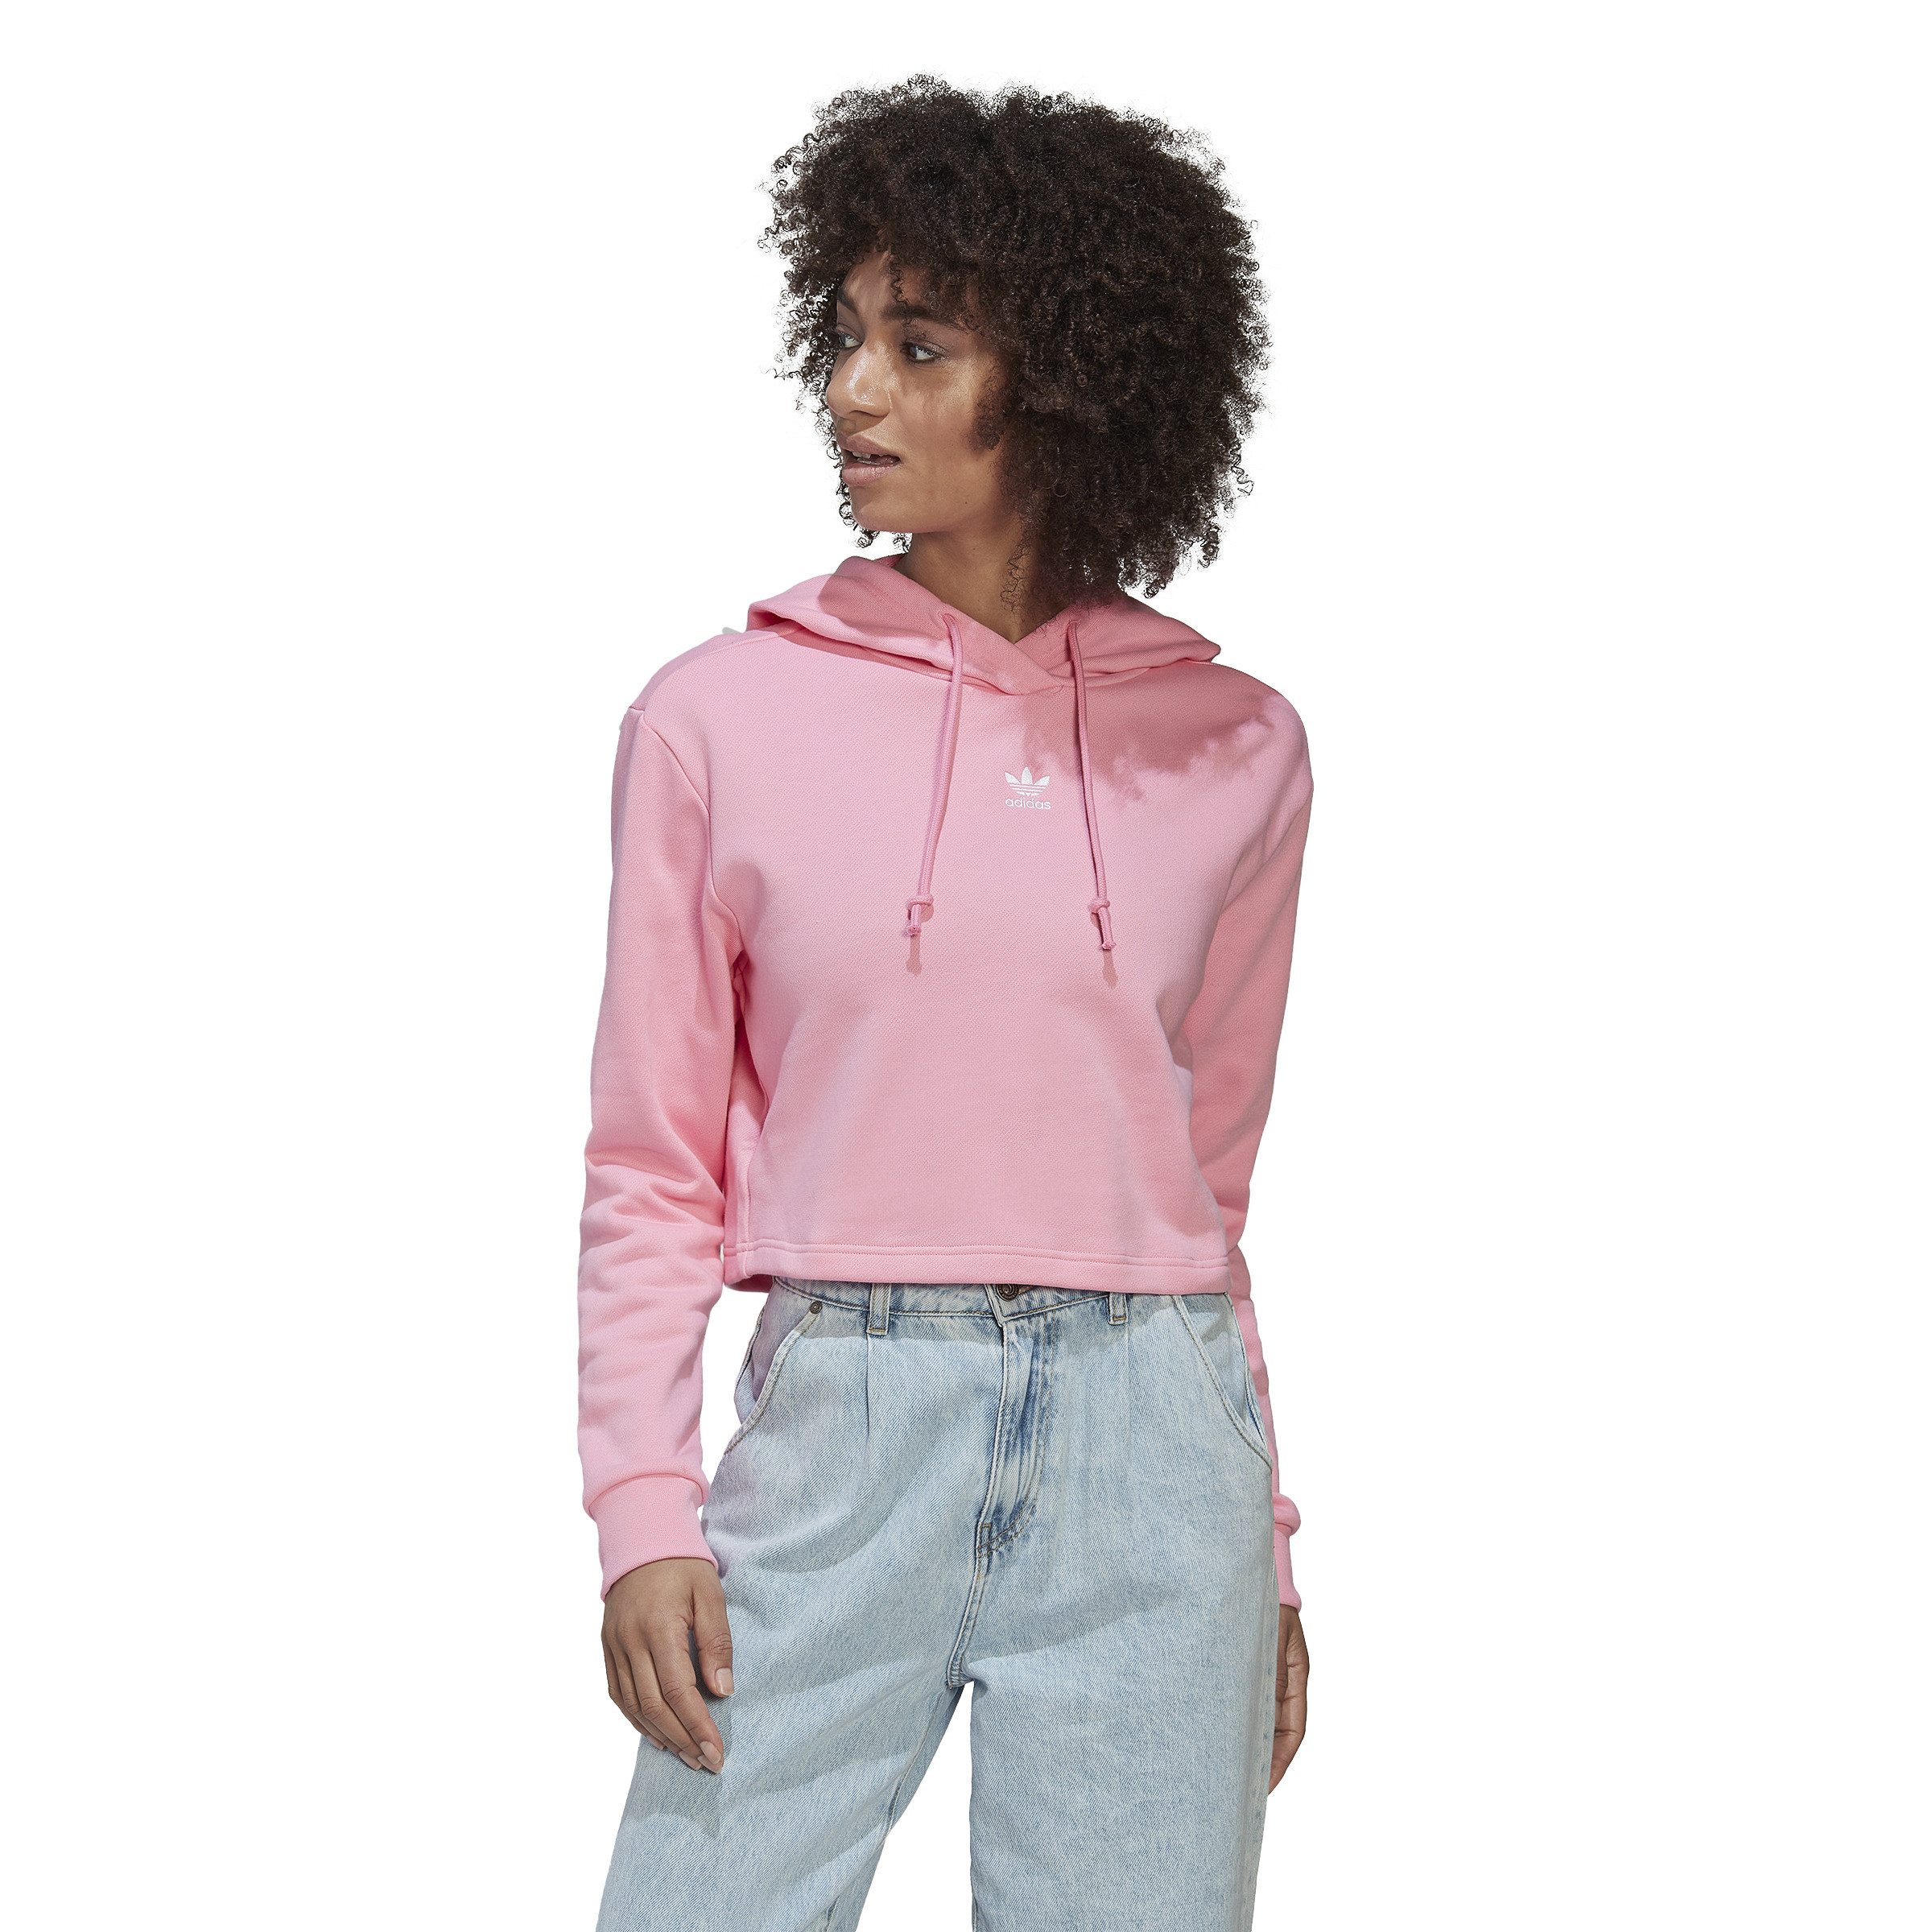 Adidas - Adicolor crop sweatshirt, Pink, large image number 4